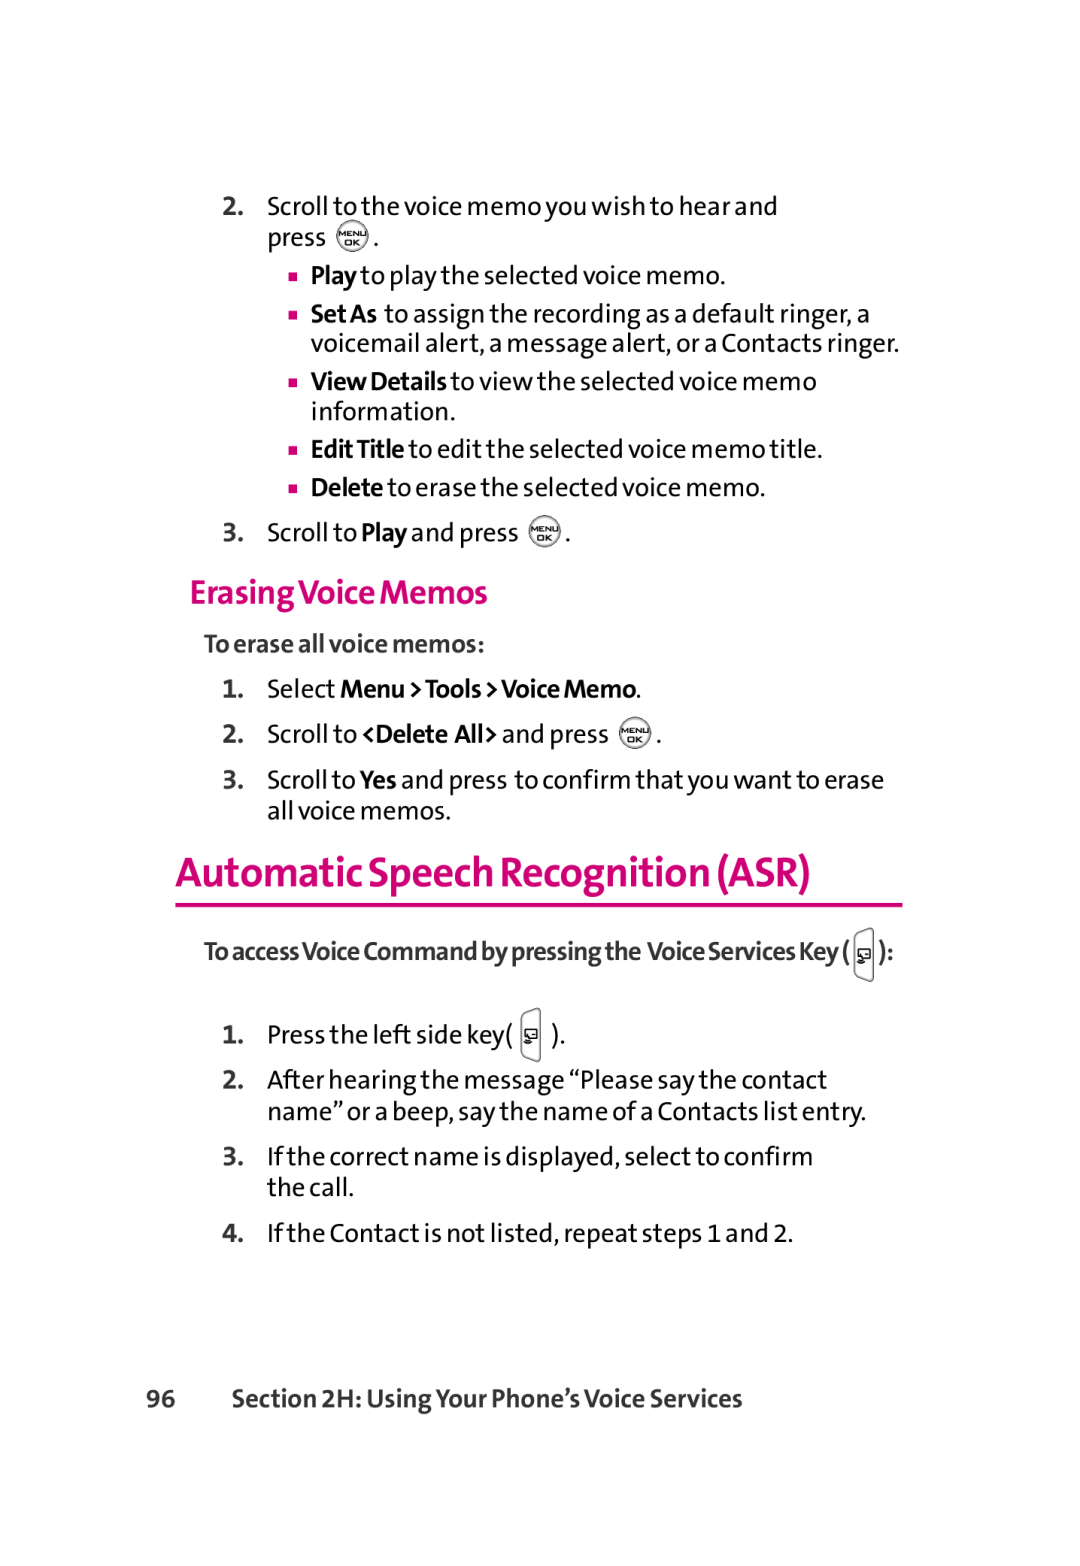 LG Electronics 350 manual Automatic Speech Recognition ASR, ErasingVoice Memos, To erase all voice memos 